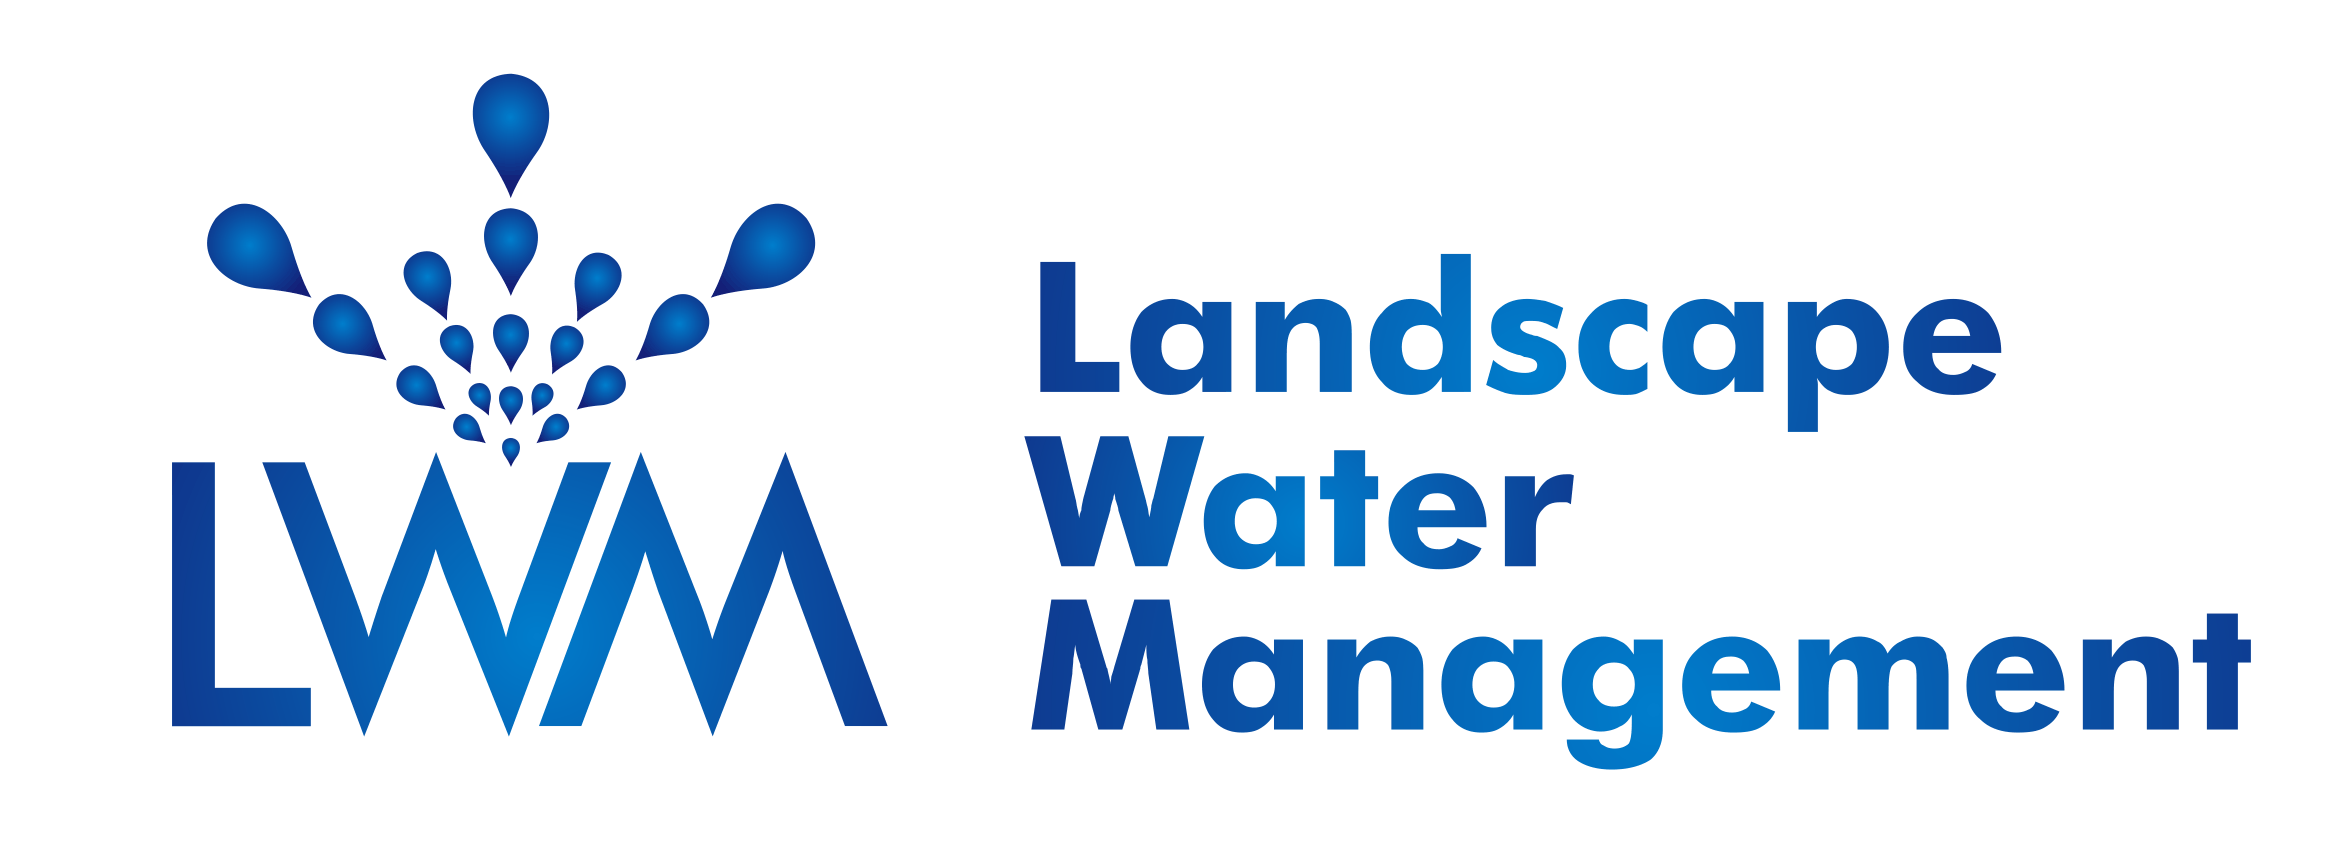 Landscape Water Management Logo